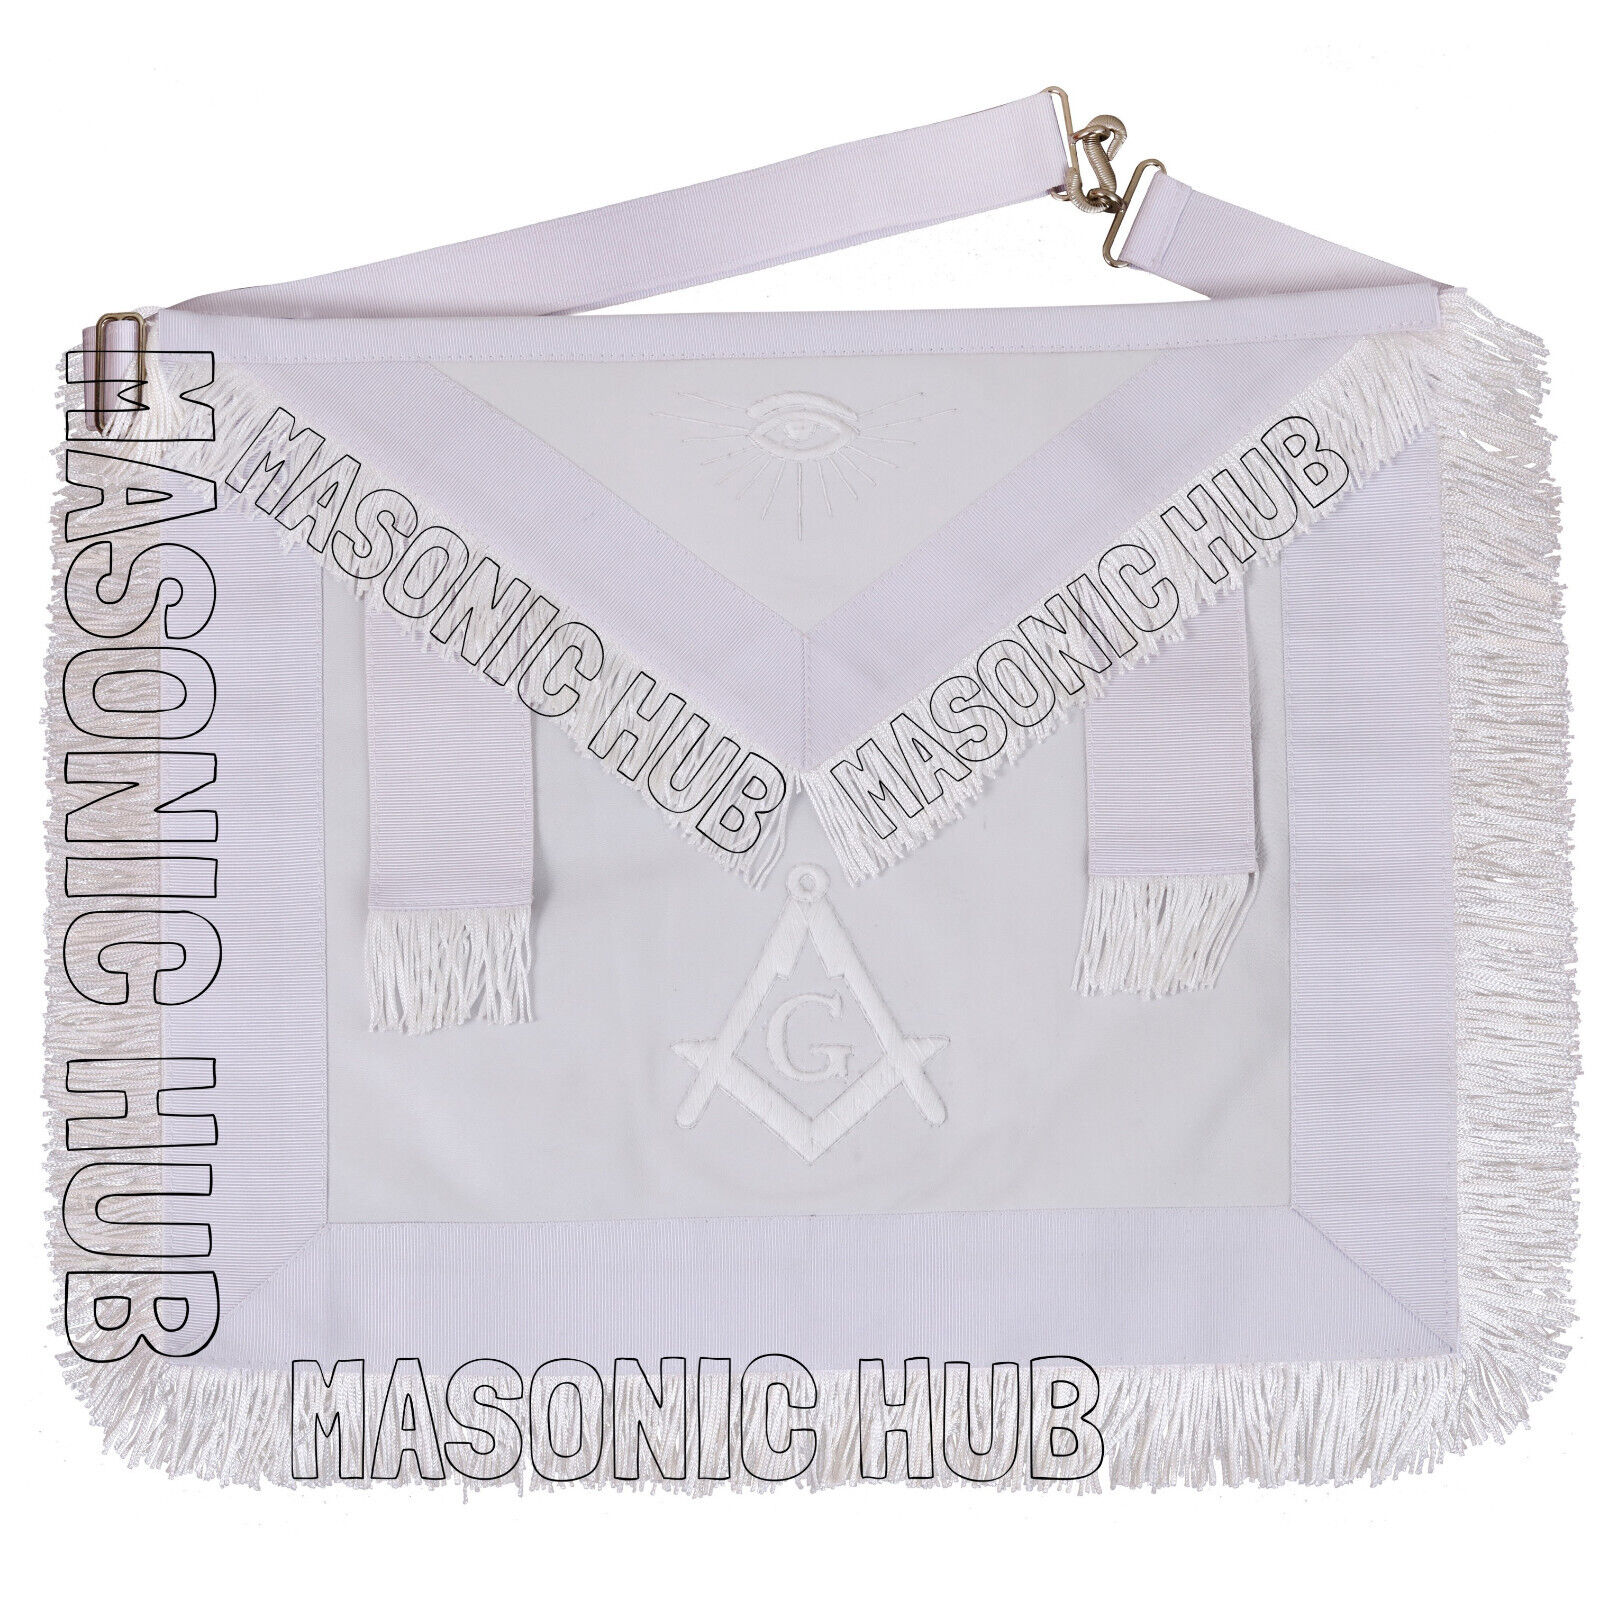 Masonic Master Mason 100% Lambskin Apron All White with Fringe - Hand Embroidere